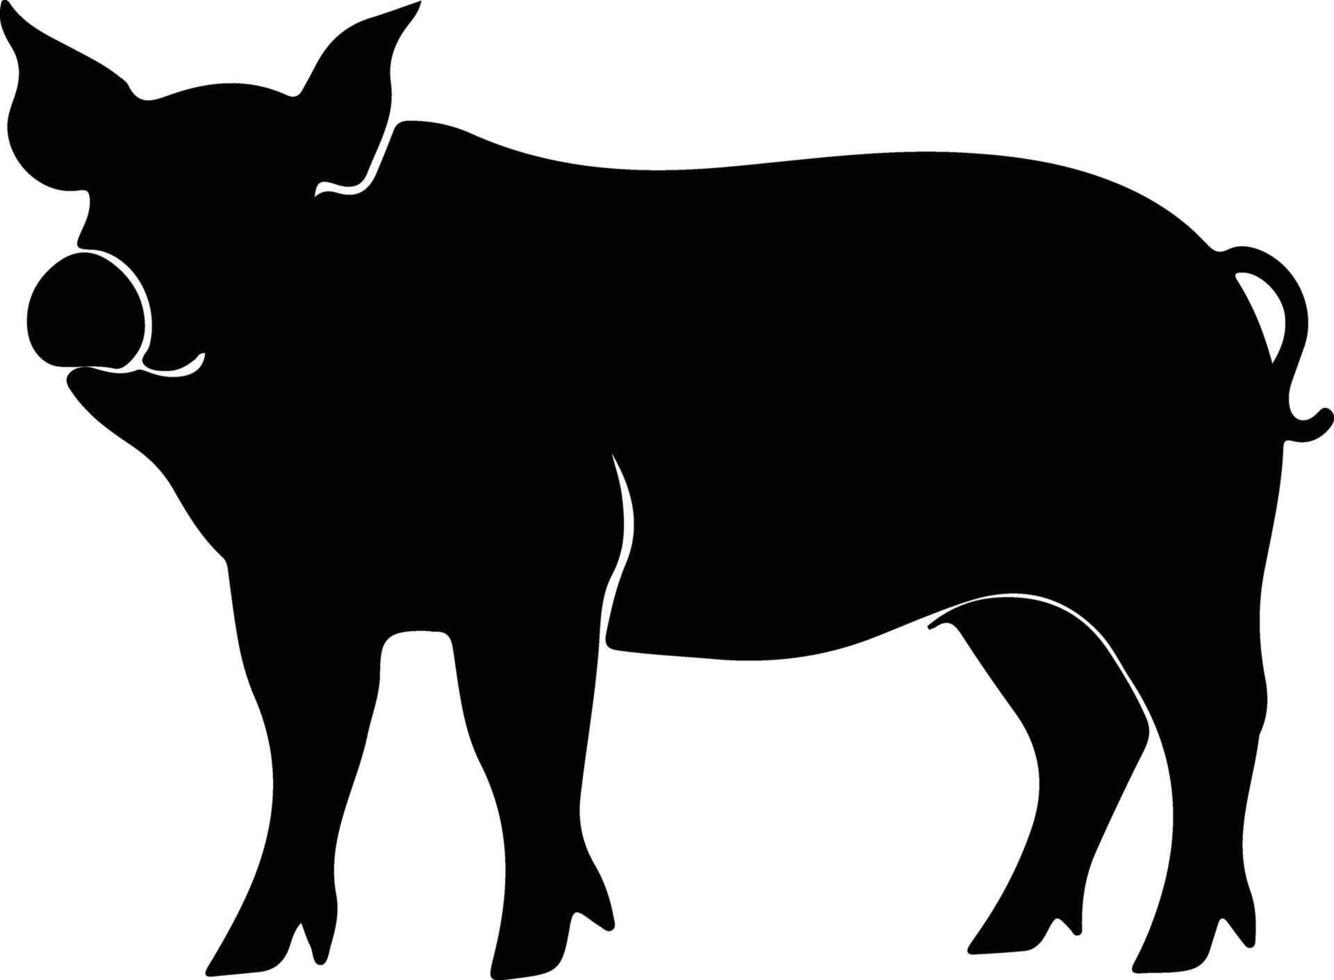 pig black silhouette vector